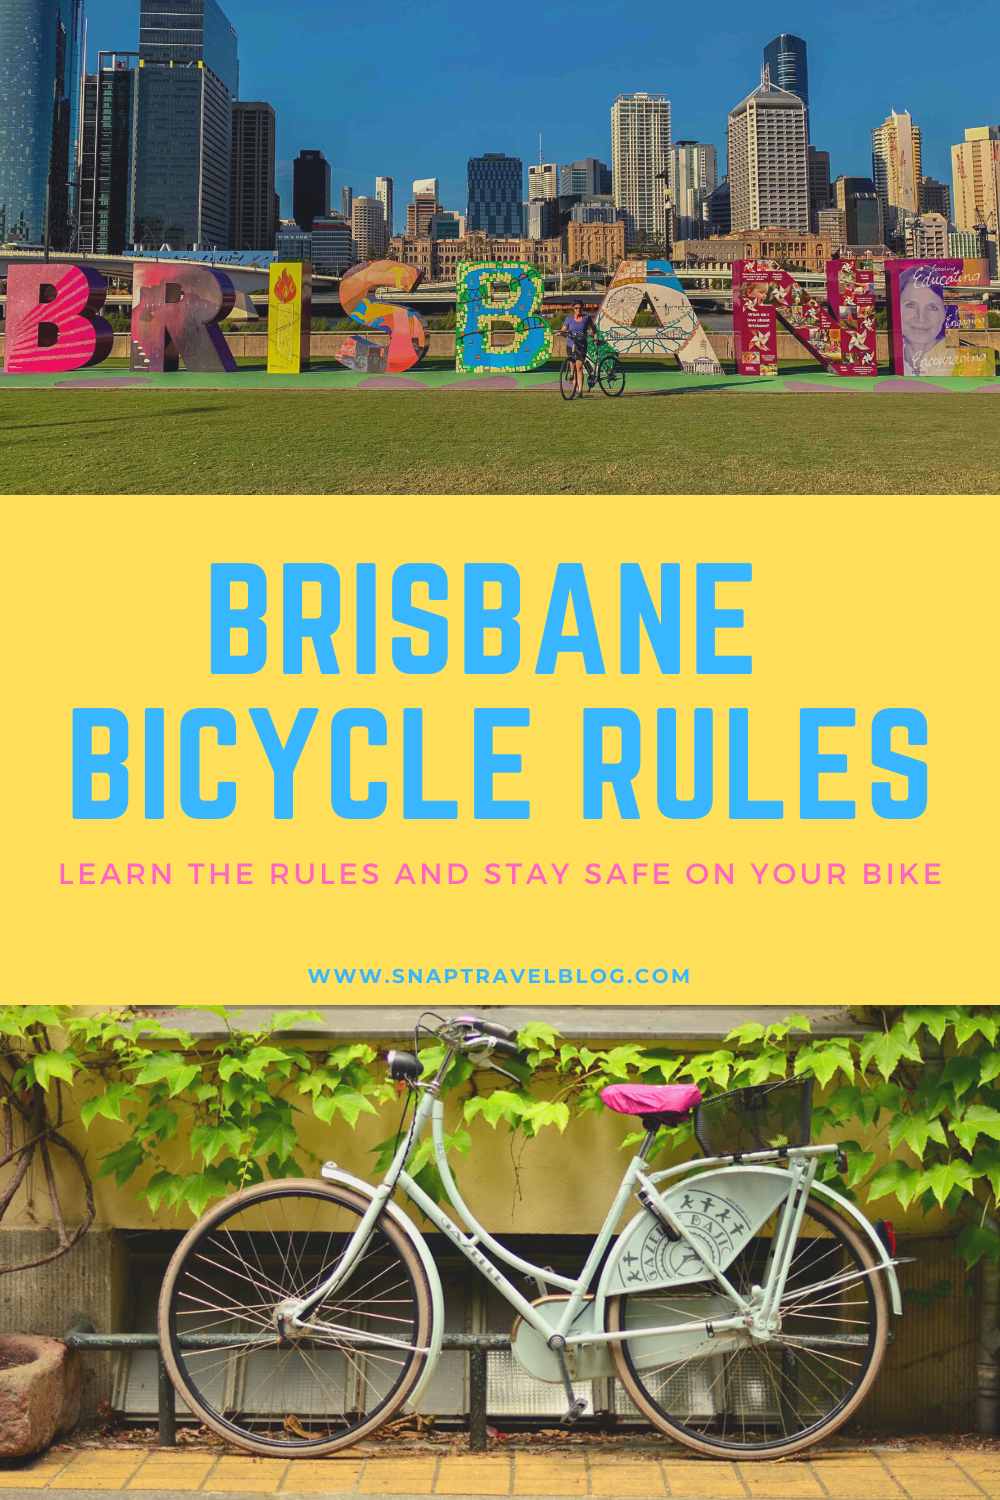 Brisbane Bicycle Rules